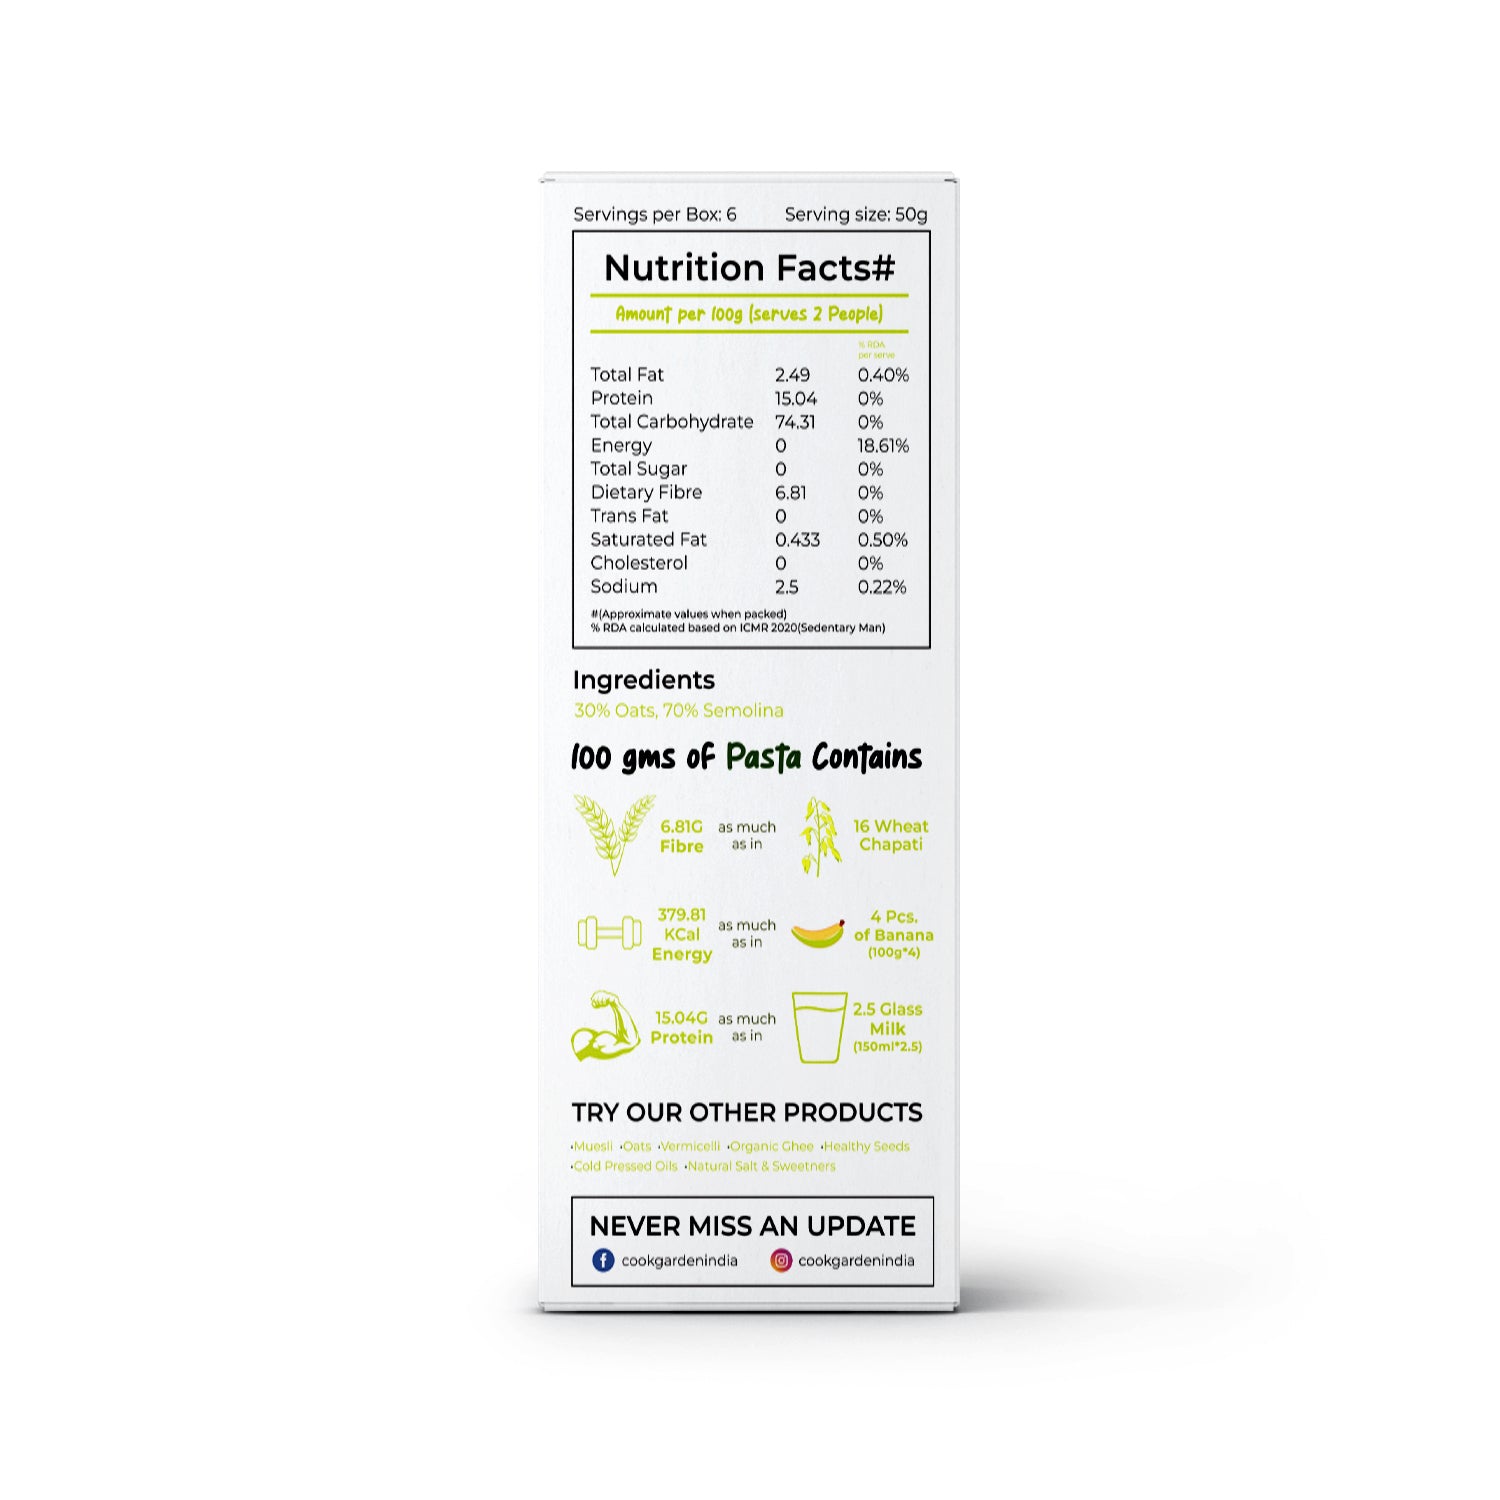 Oats Macaroni Pasta | High Protein High Fiber | High Energy & Cholesterol Free, 300g